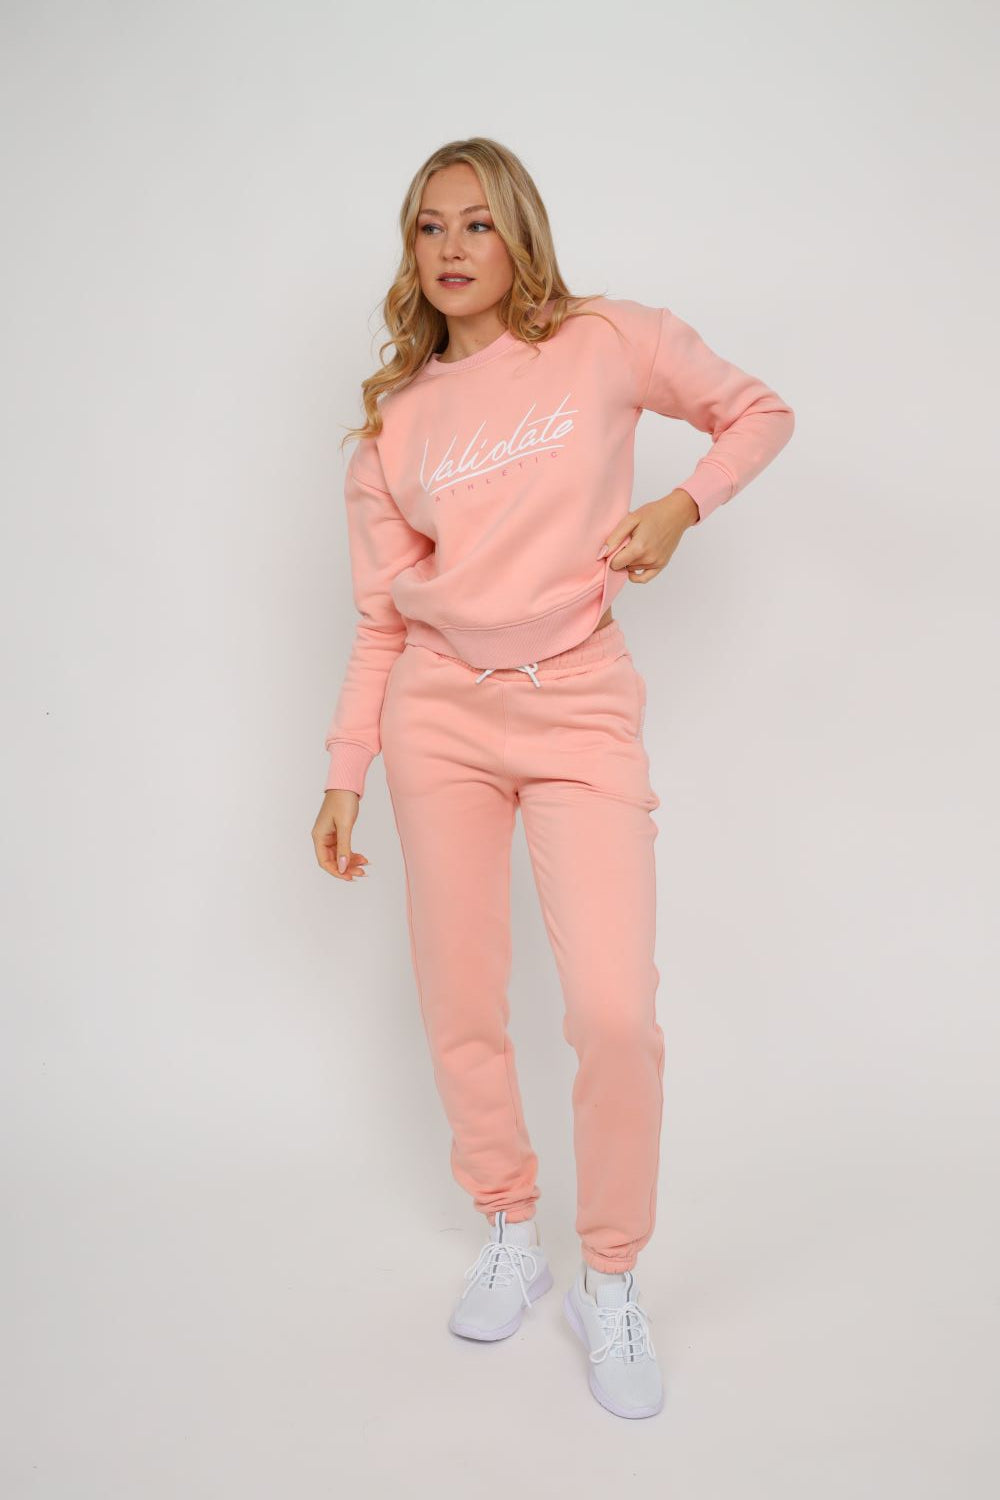 Validate Pink Emilia Sweatshirt | Validate Fashion Hoodies & Sweatshirts | Hertfordshire